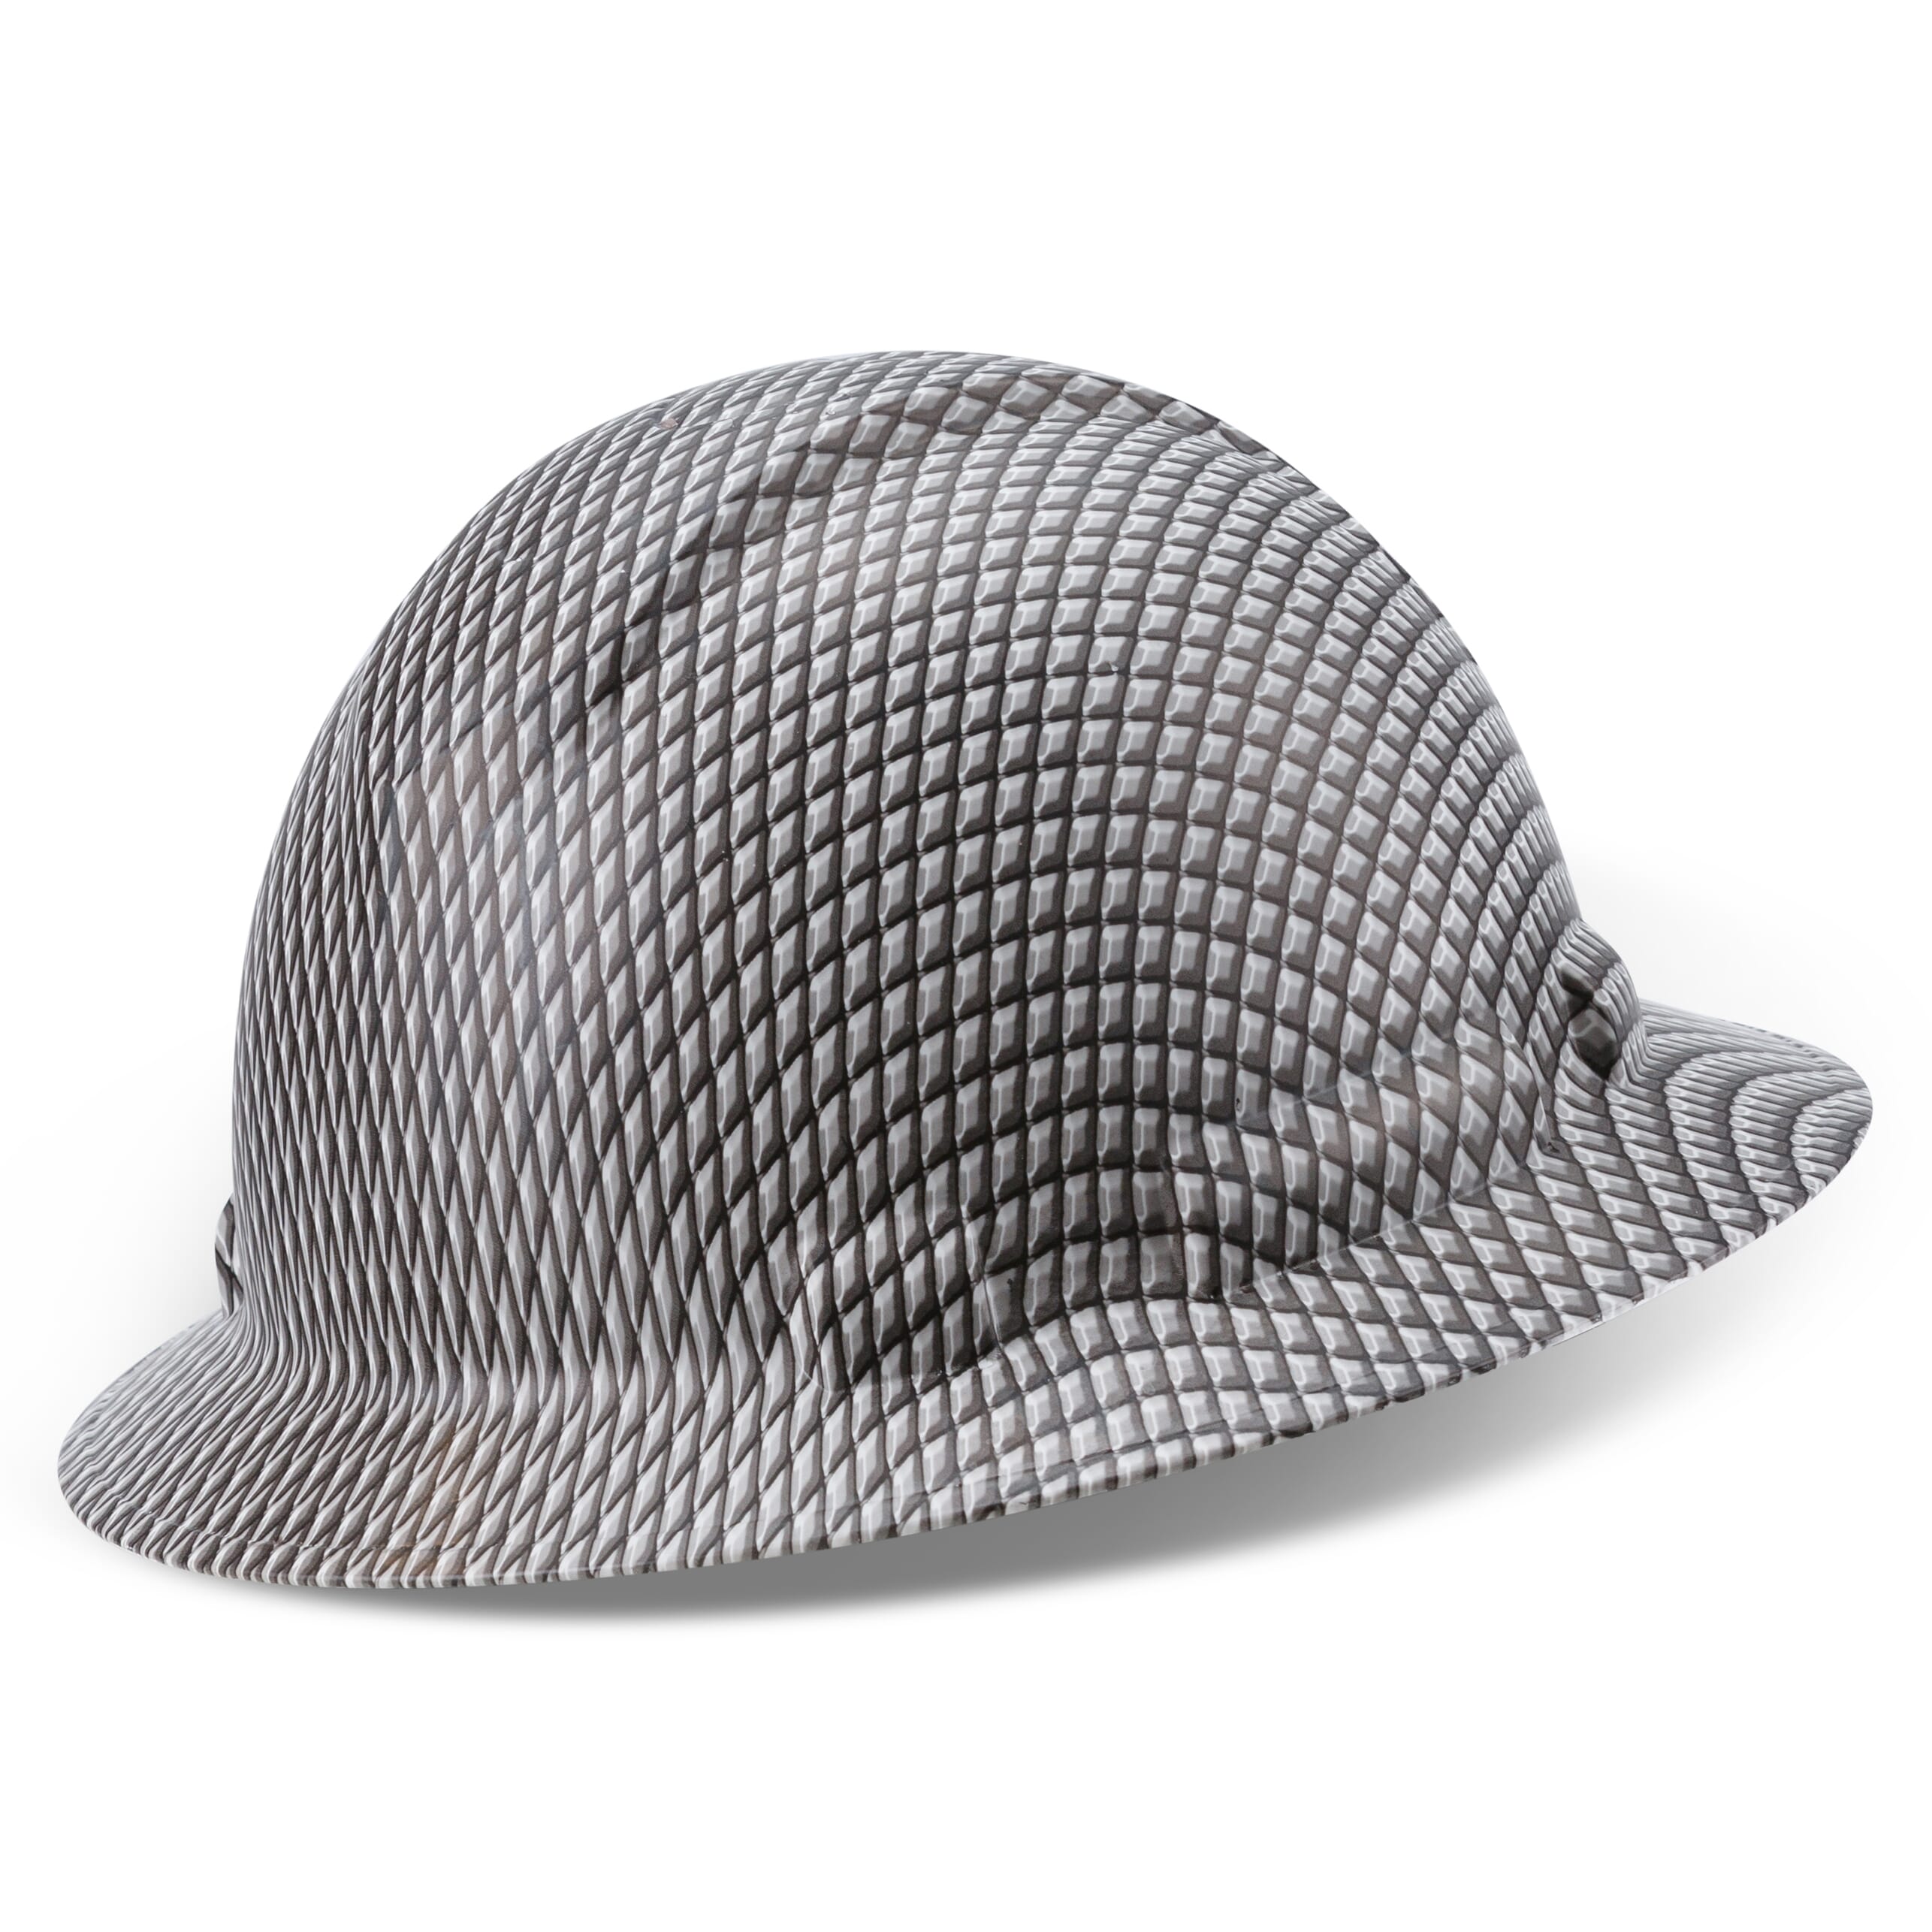 Full Brim Pyramex Hard Hat, Custom 3D Diamonds Design, Safety Helmet, 6 Point